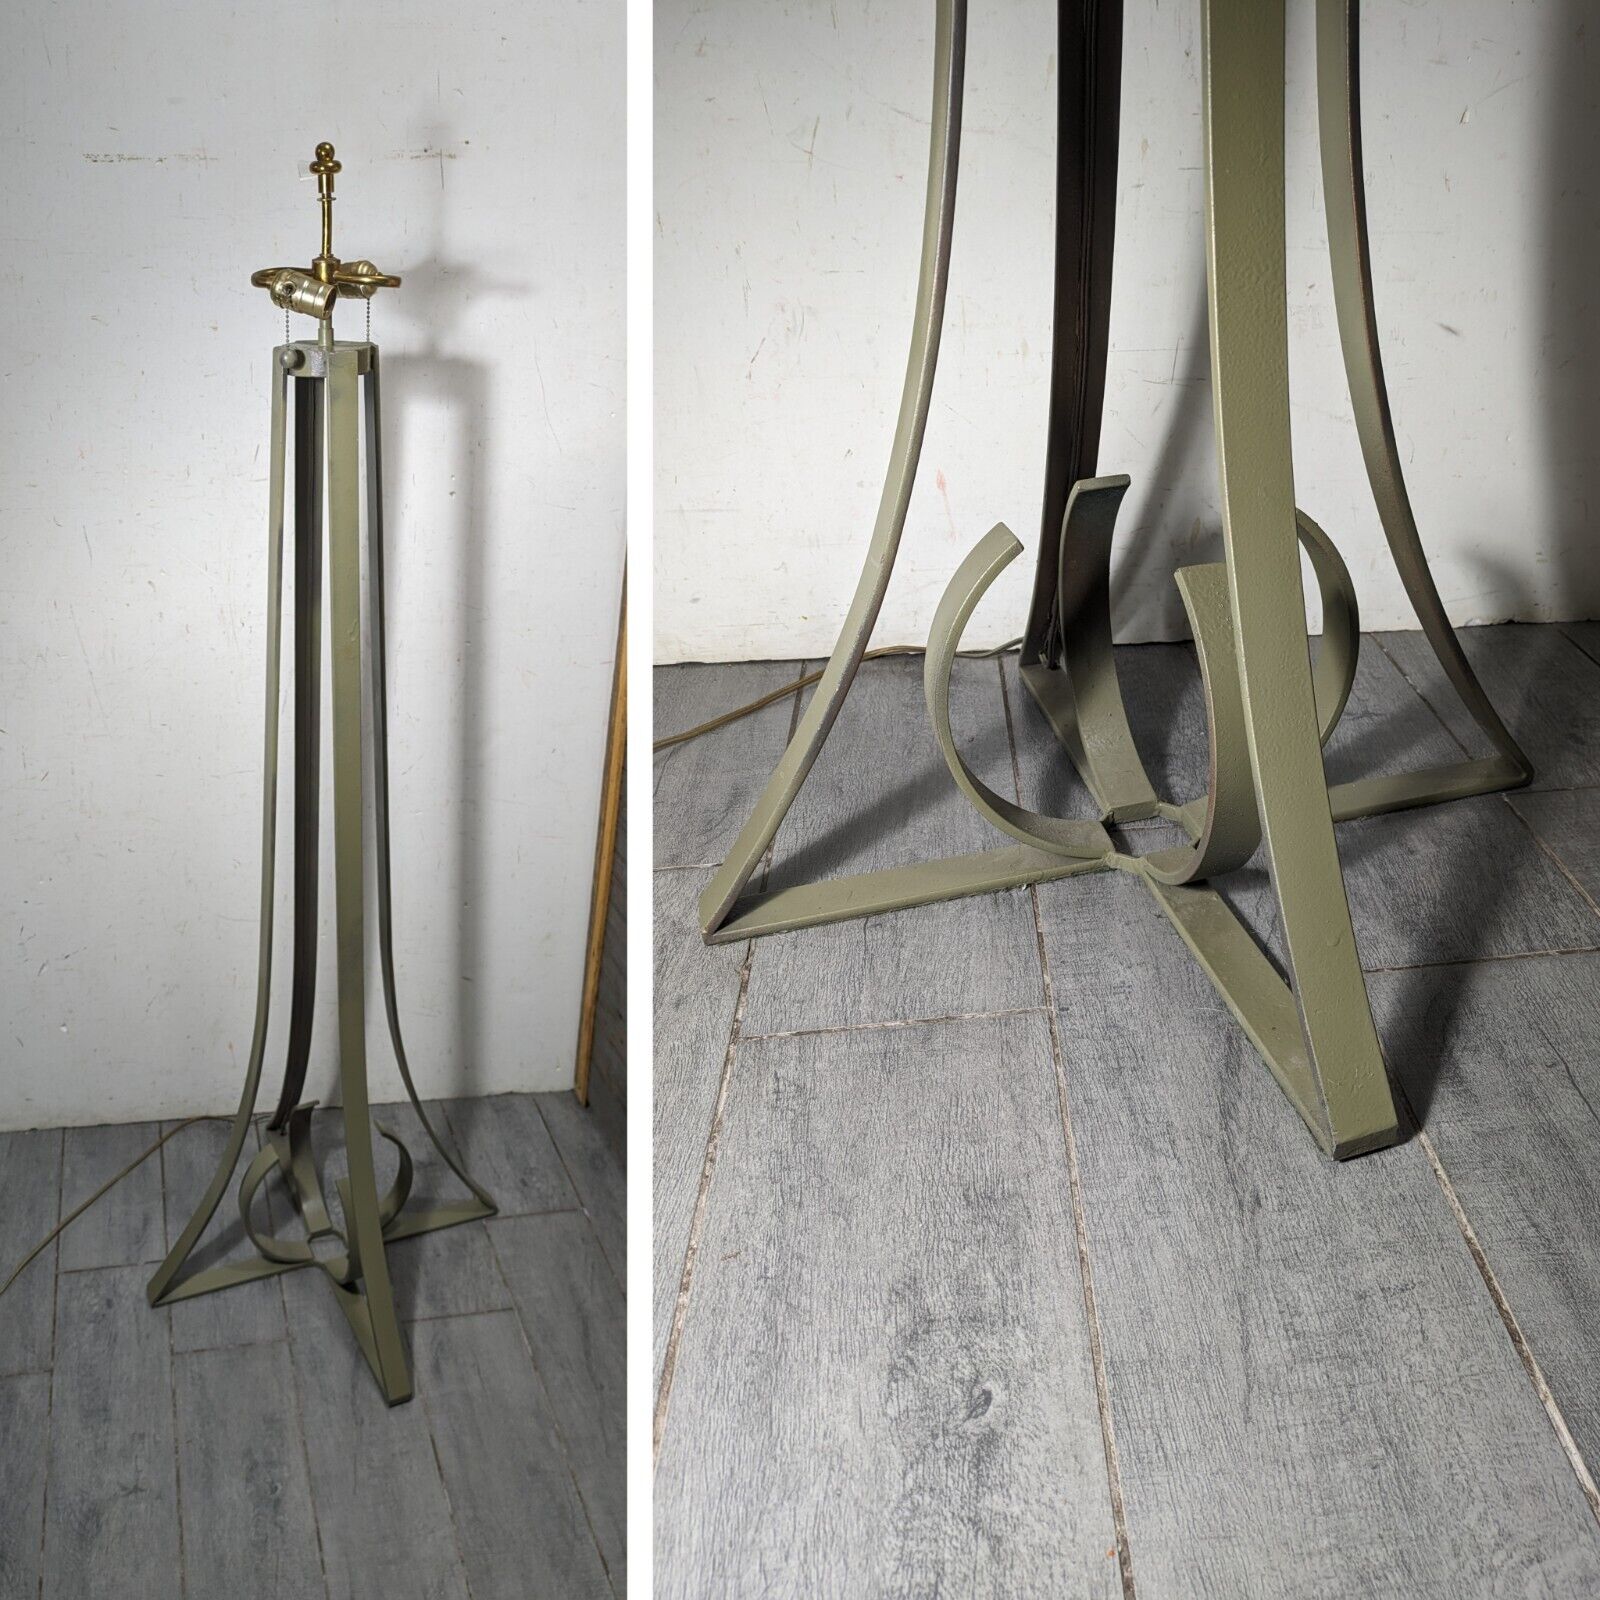 Vintage Art Deco Nouveau Sculptural Industrial Metal Floor Lamp Arts & Crafts